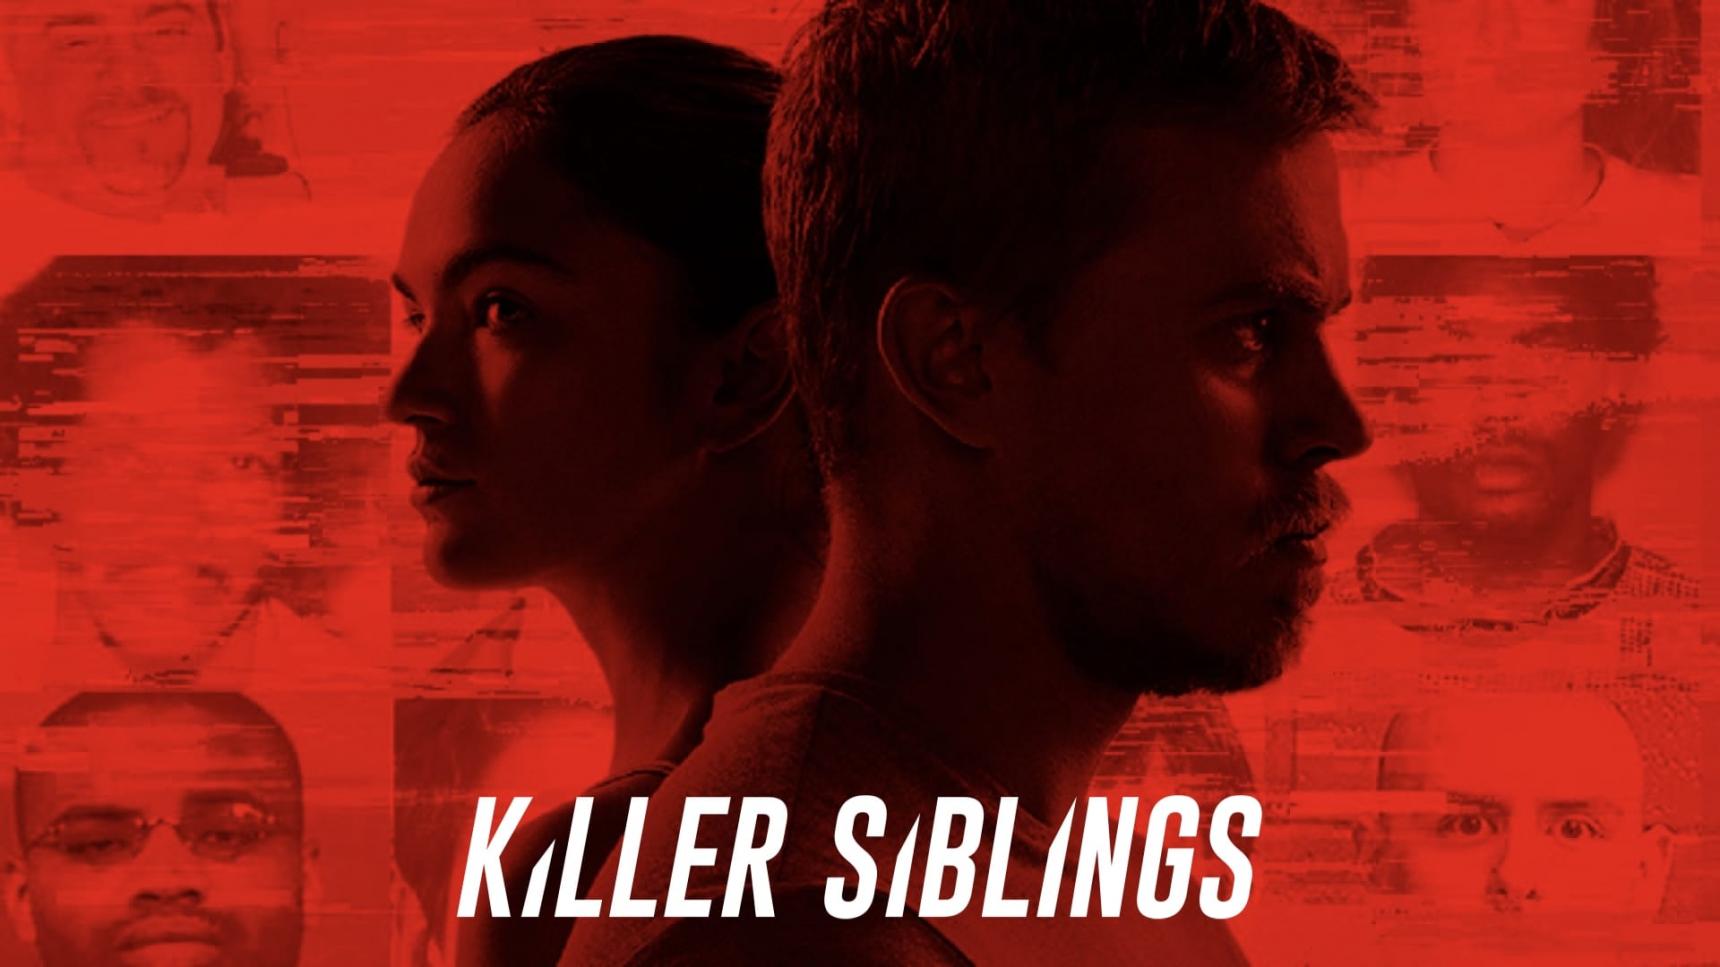 Poster del episodio 2 de Killer Siblings online